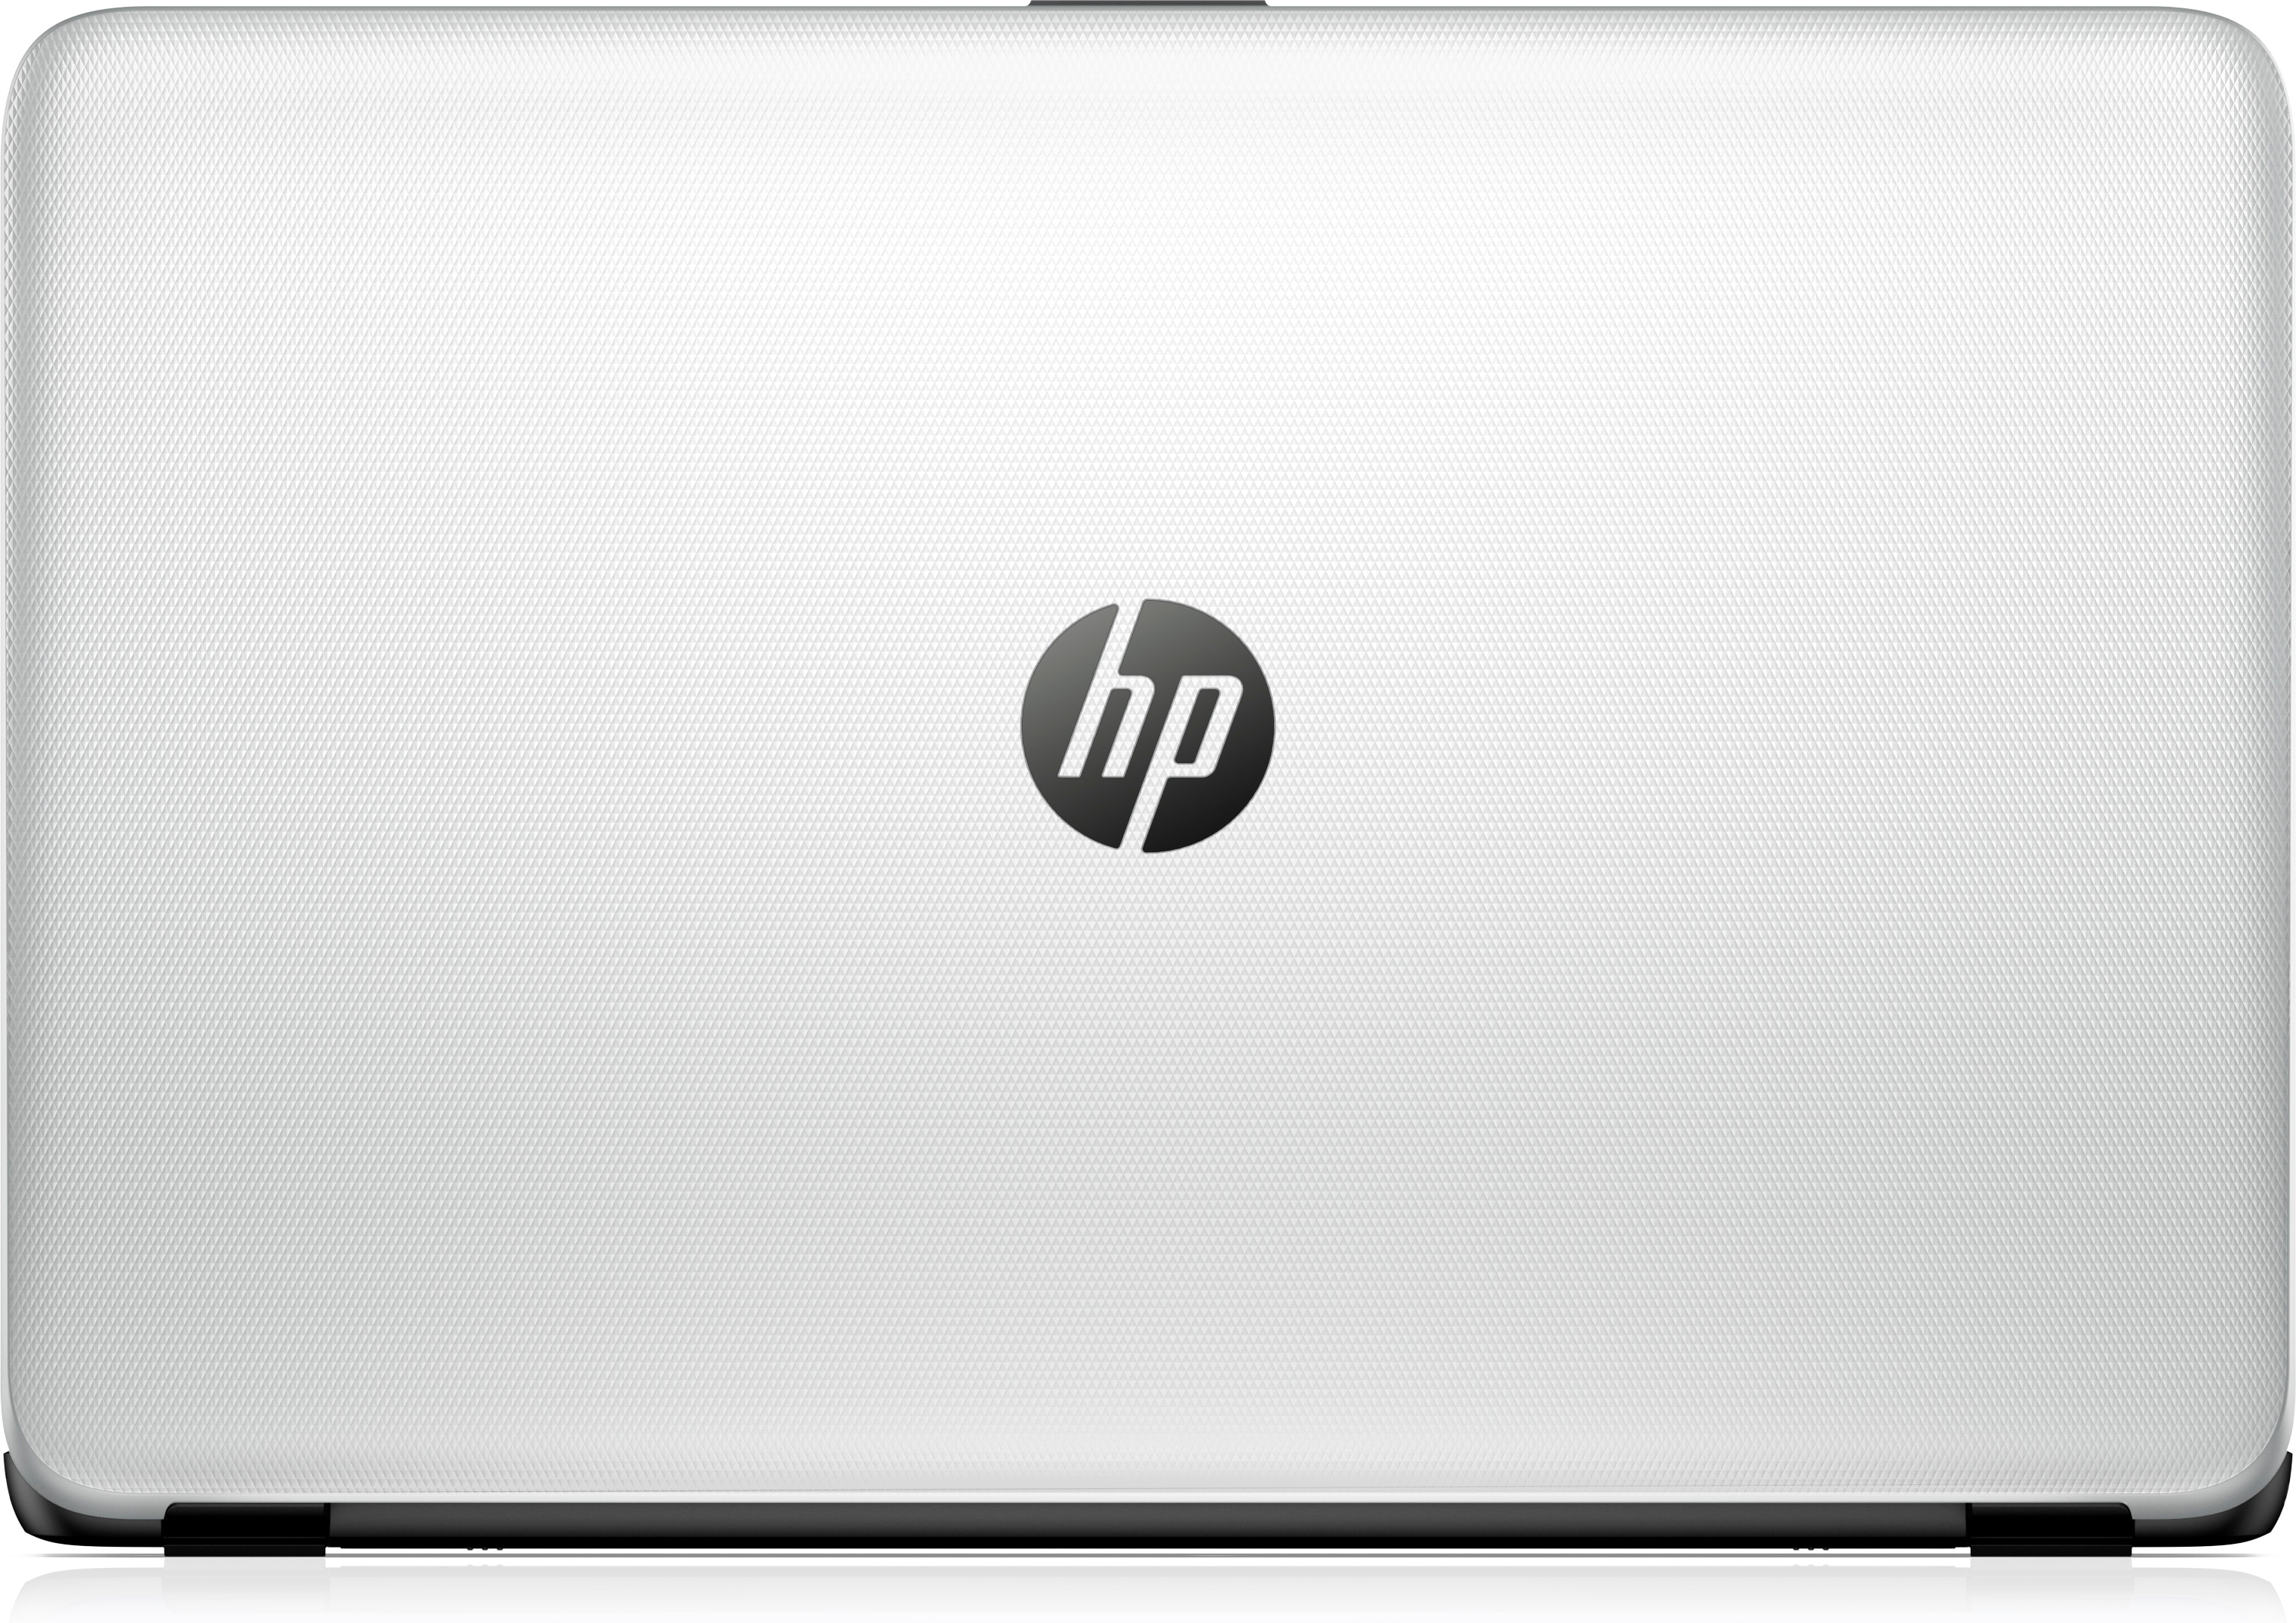 HP N9T16EA 15.6" Intel Core i5-5200U 2.20 Ghz 4GB 500GB AMD R5 M330 2GB Windows 10 Laptop